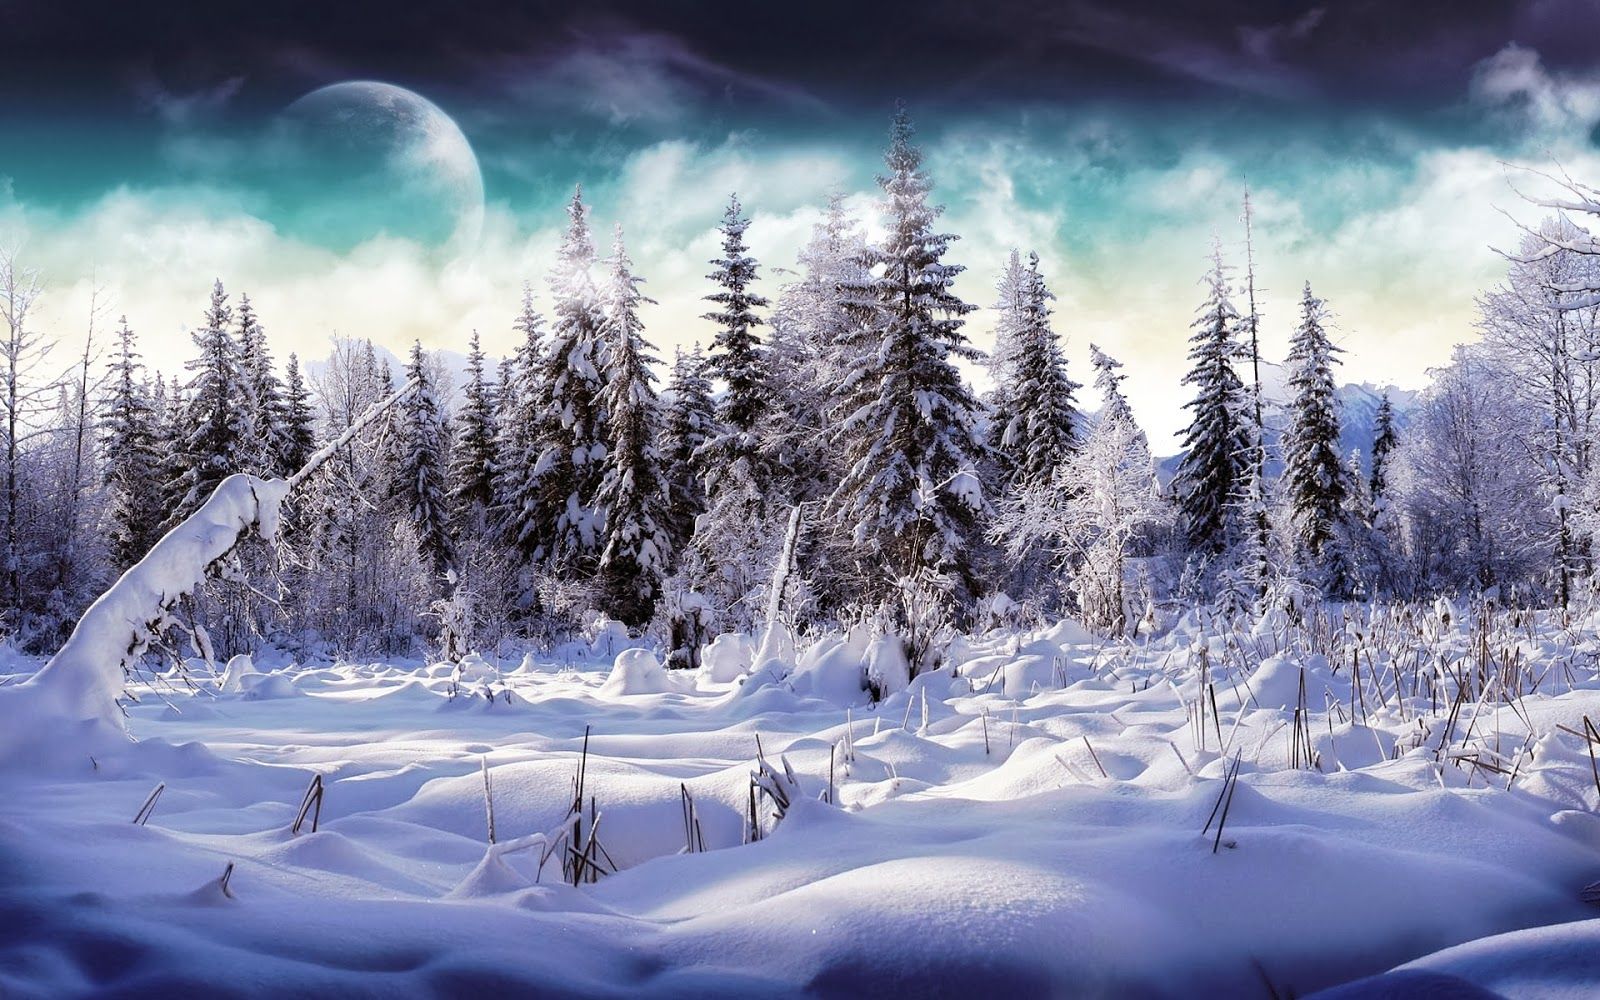 Winter HD Background Wallpaper Wallpaper Blog. Winter scenery, Winter landscape, Winter picture